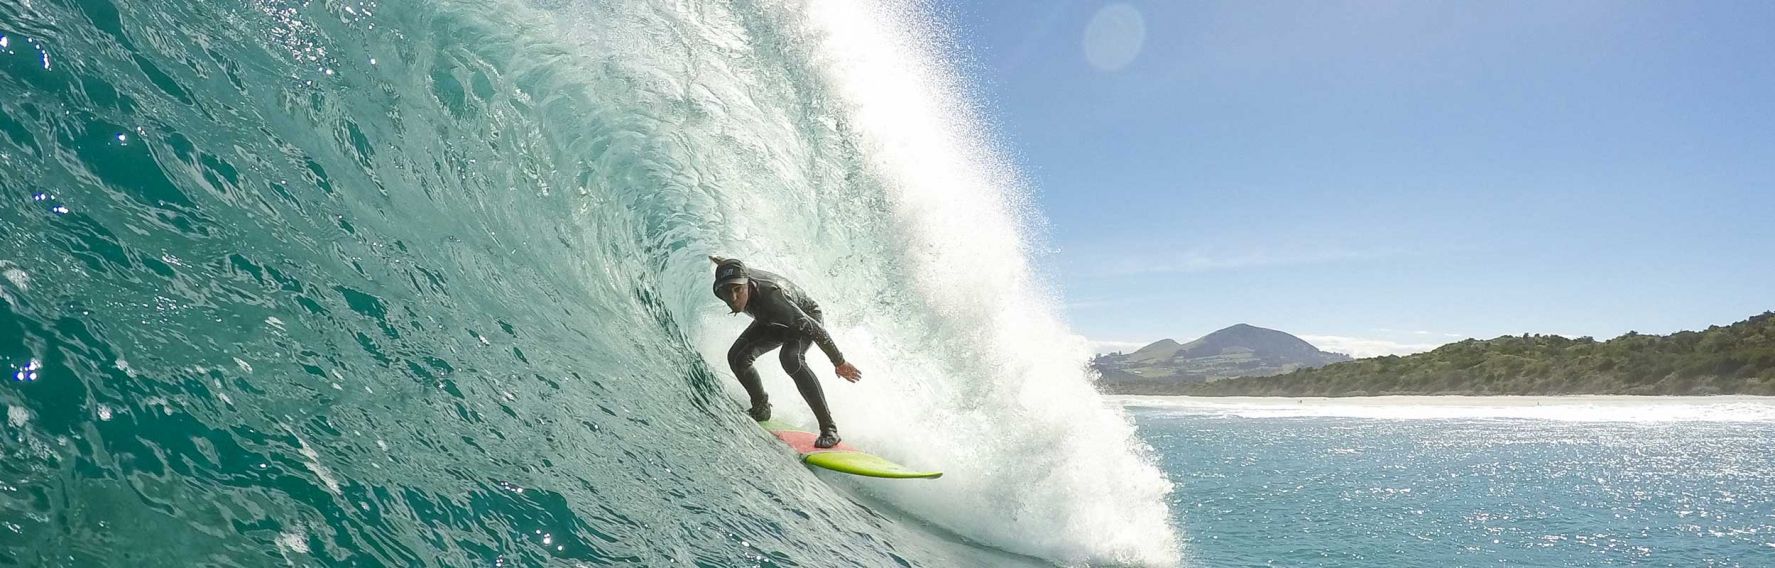 Dunedin Surfer at Blackhead